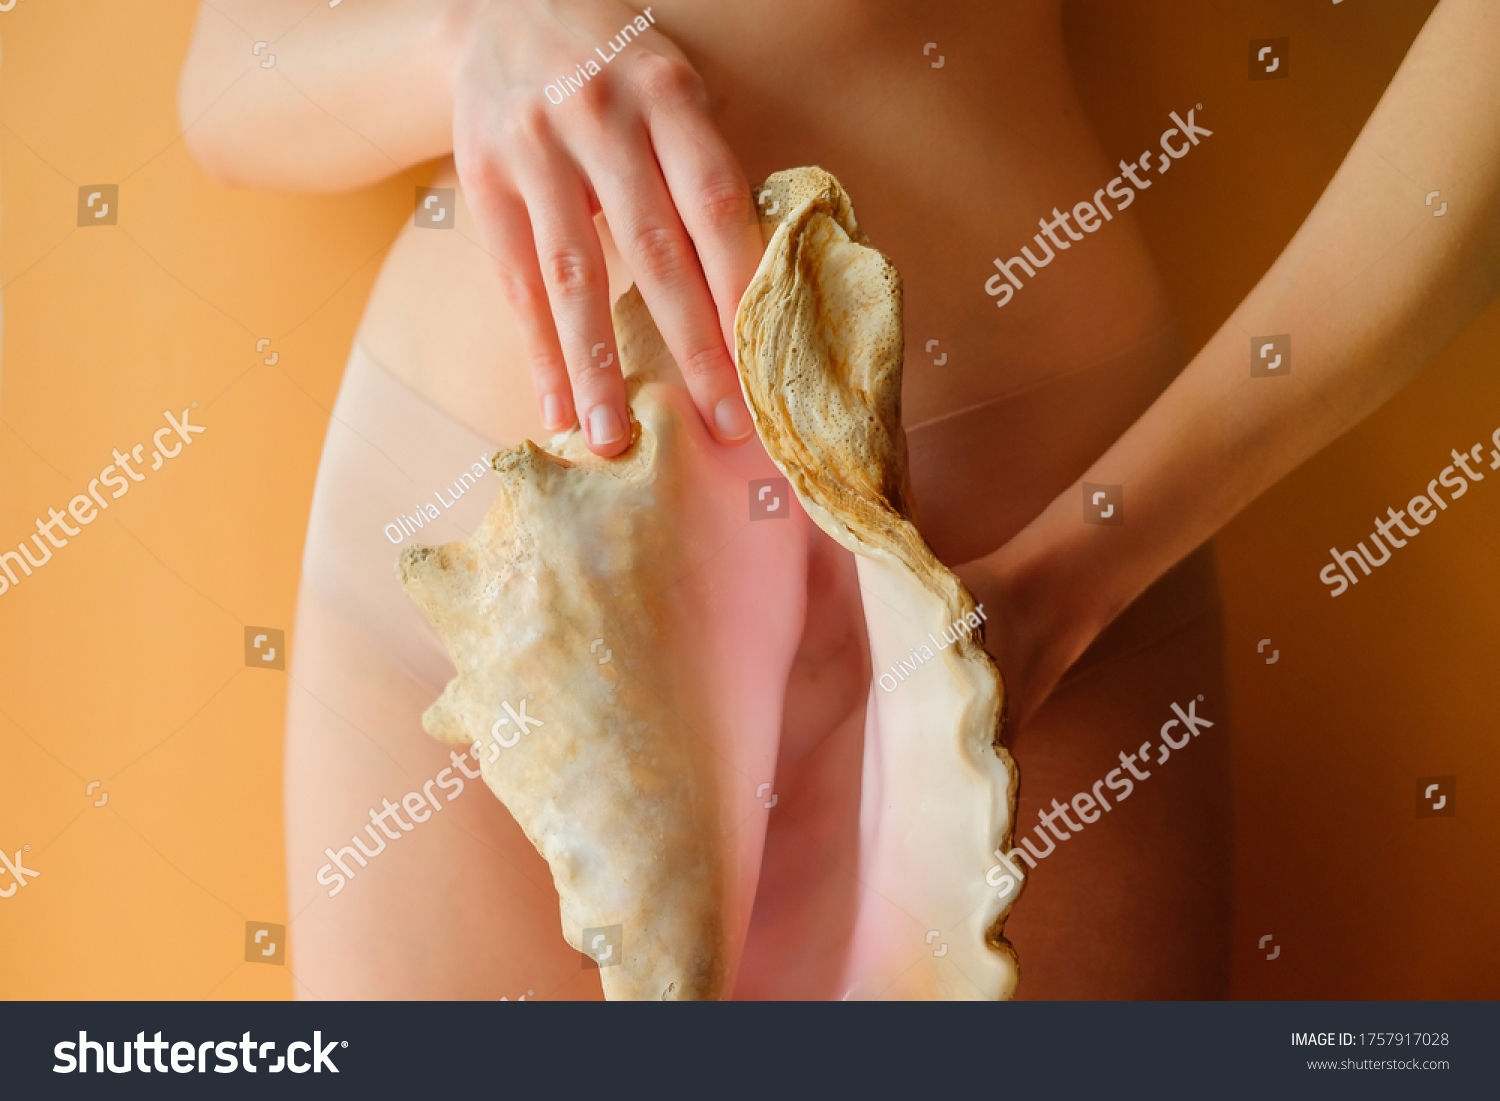 Olivia shell nude